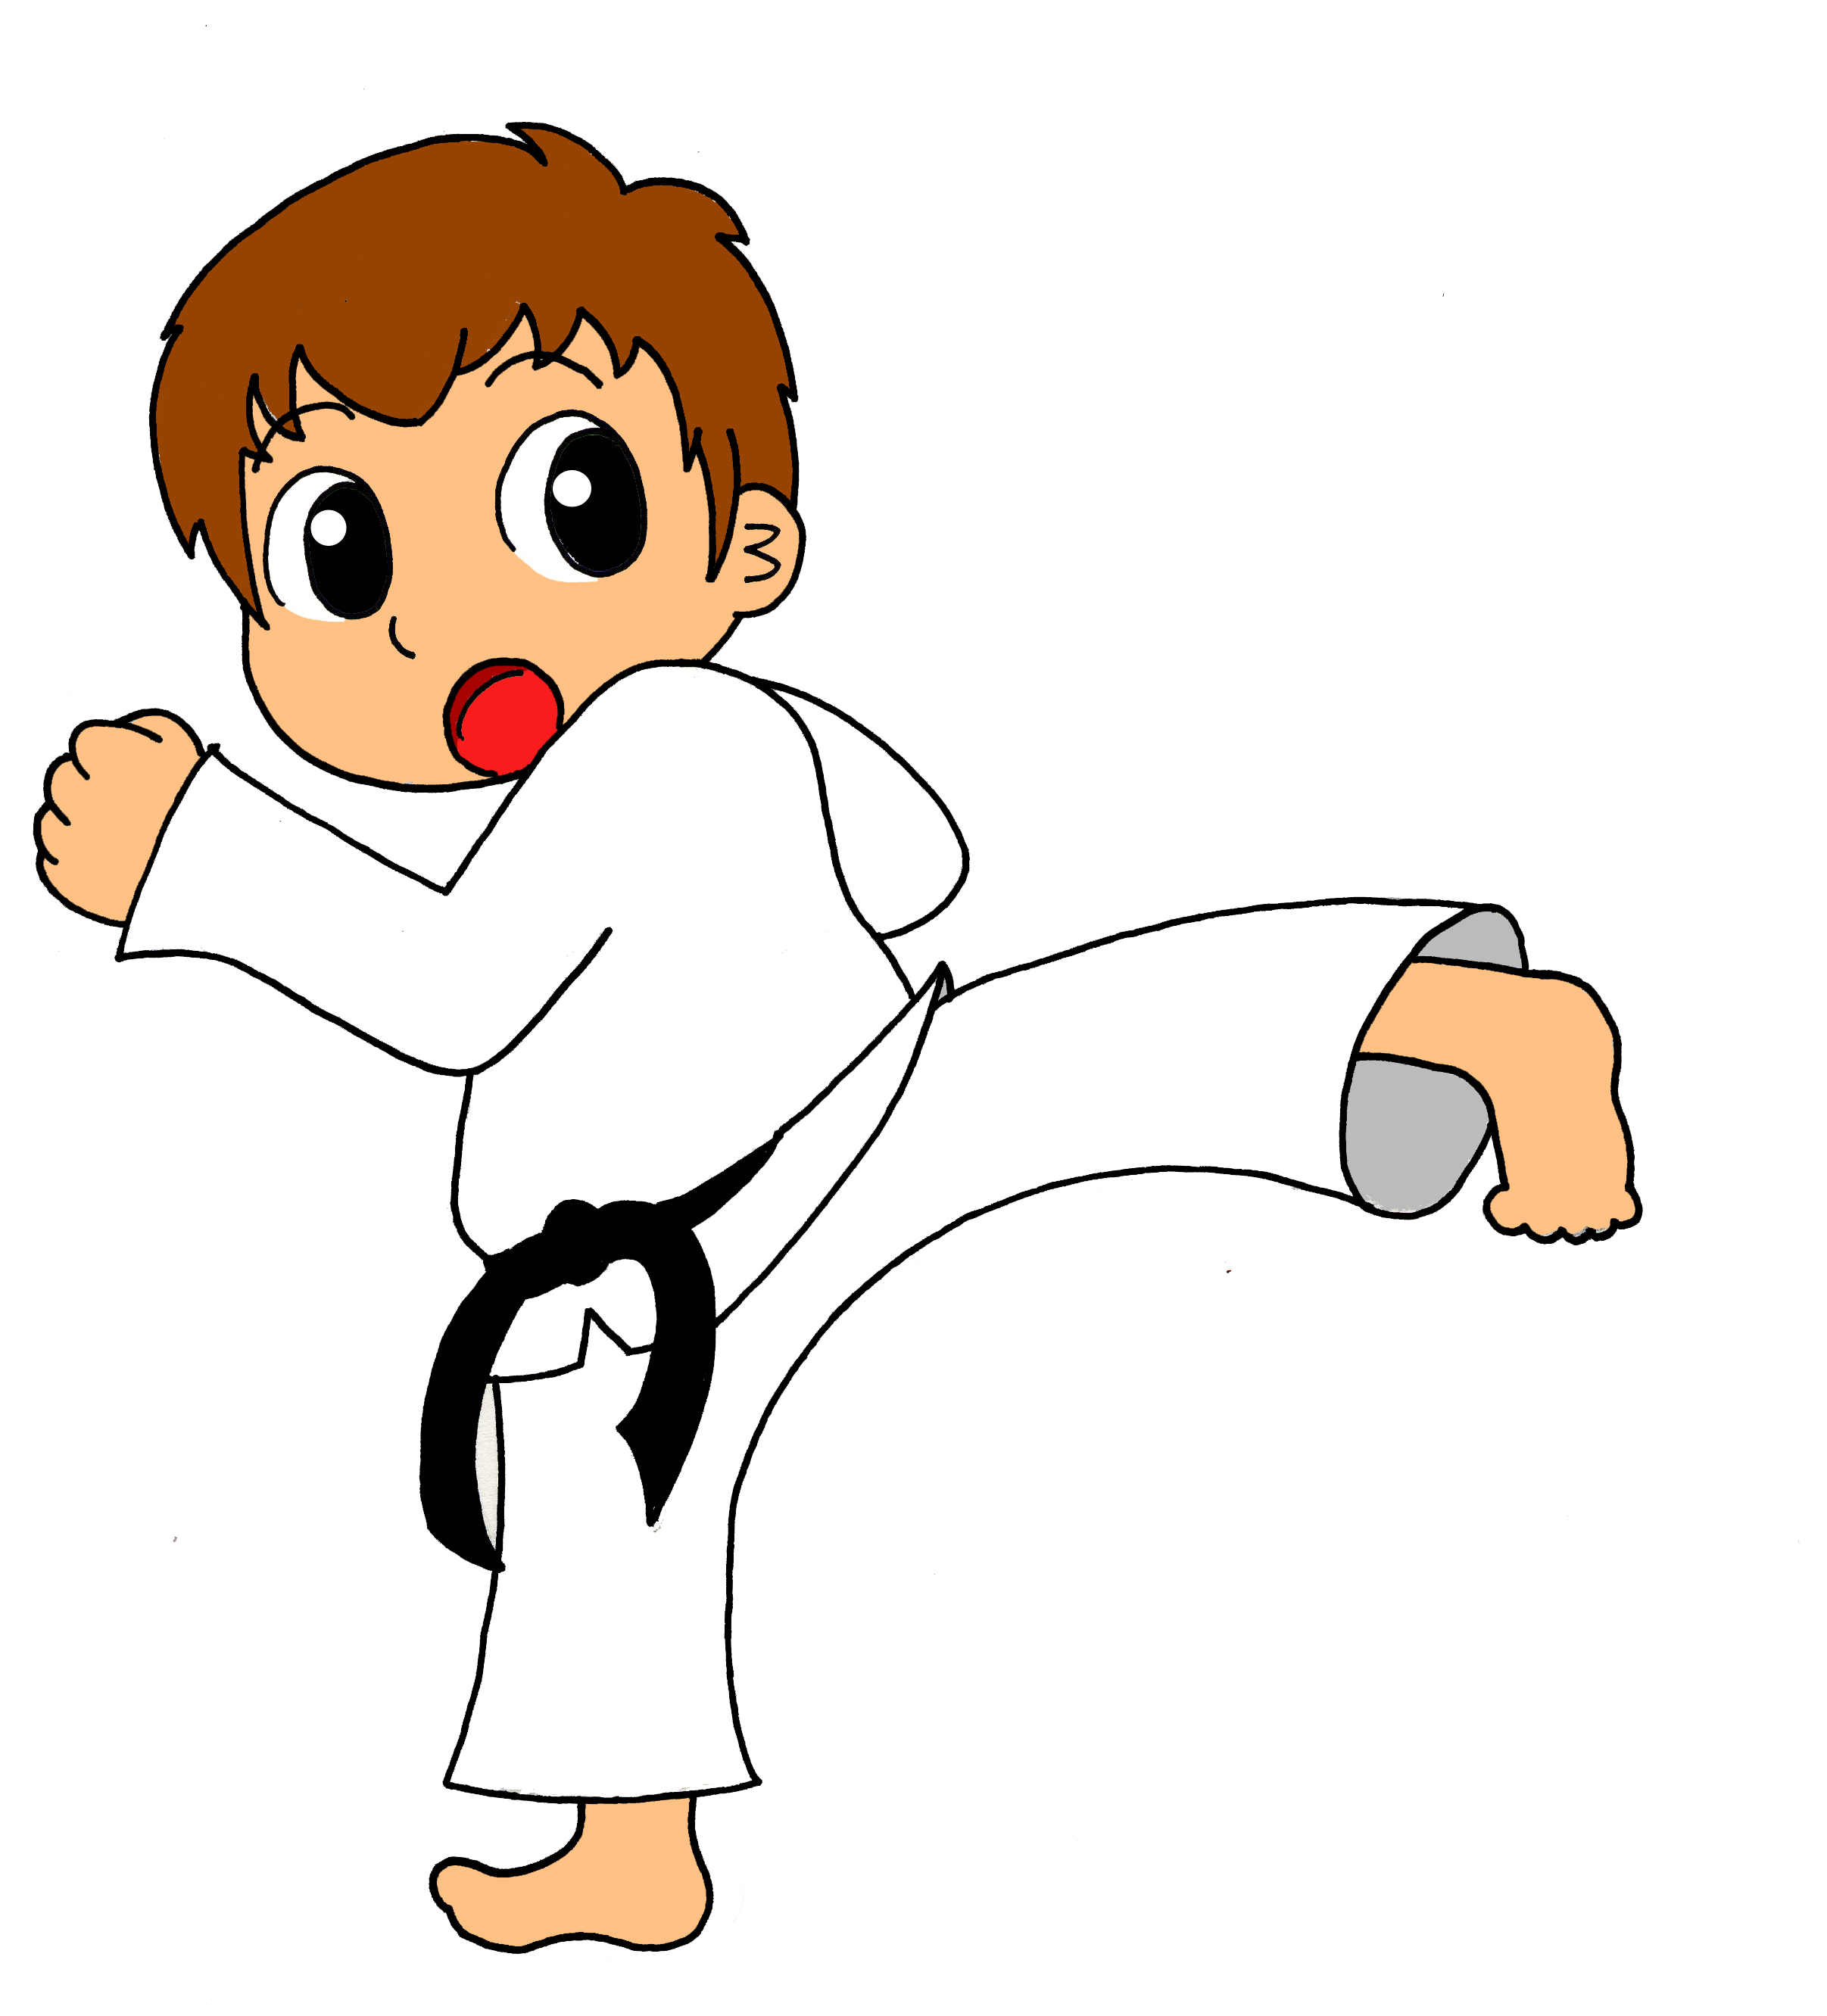 Karate boy clipart - ClipartFox